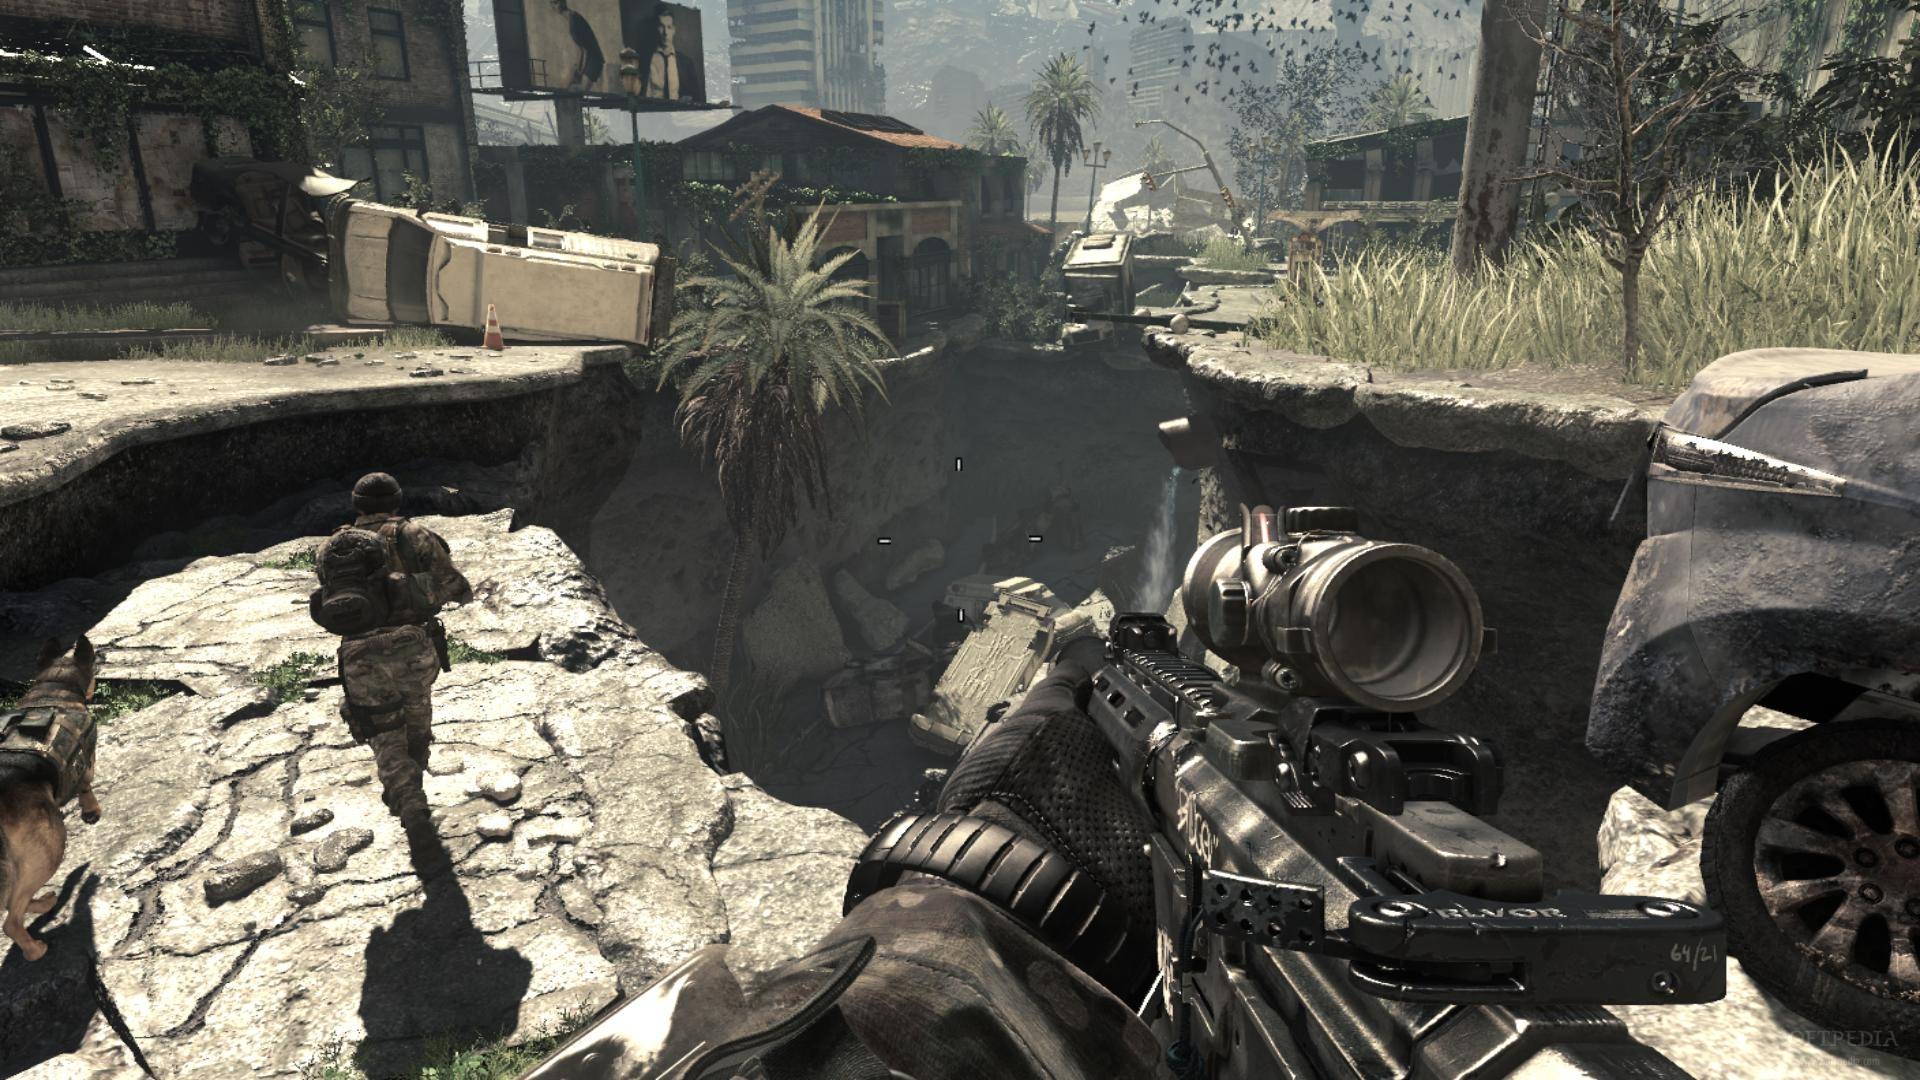  أحدث نسخة من Call of Duty تحميل  Call Of Duty Ghosts نسخة كاملة  Download-Now-Call-of-Duty-Ghosts-PC-Updates-to-Remove-6GB-RAM-Limit-401562-2